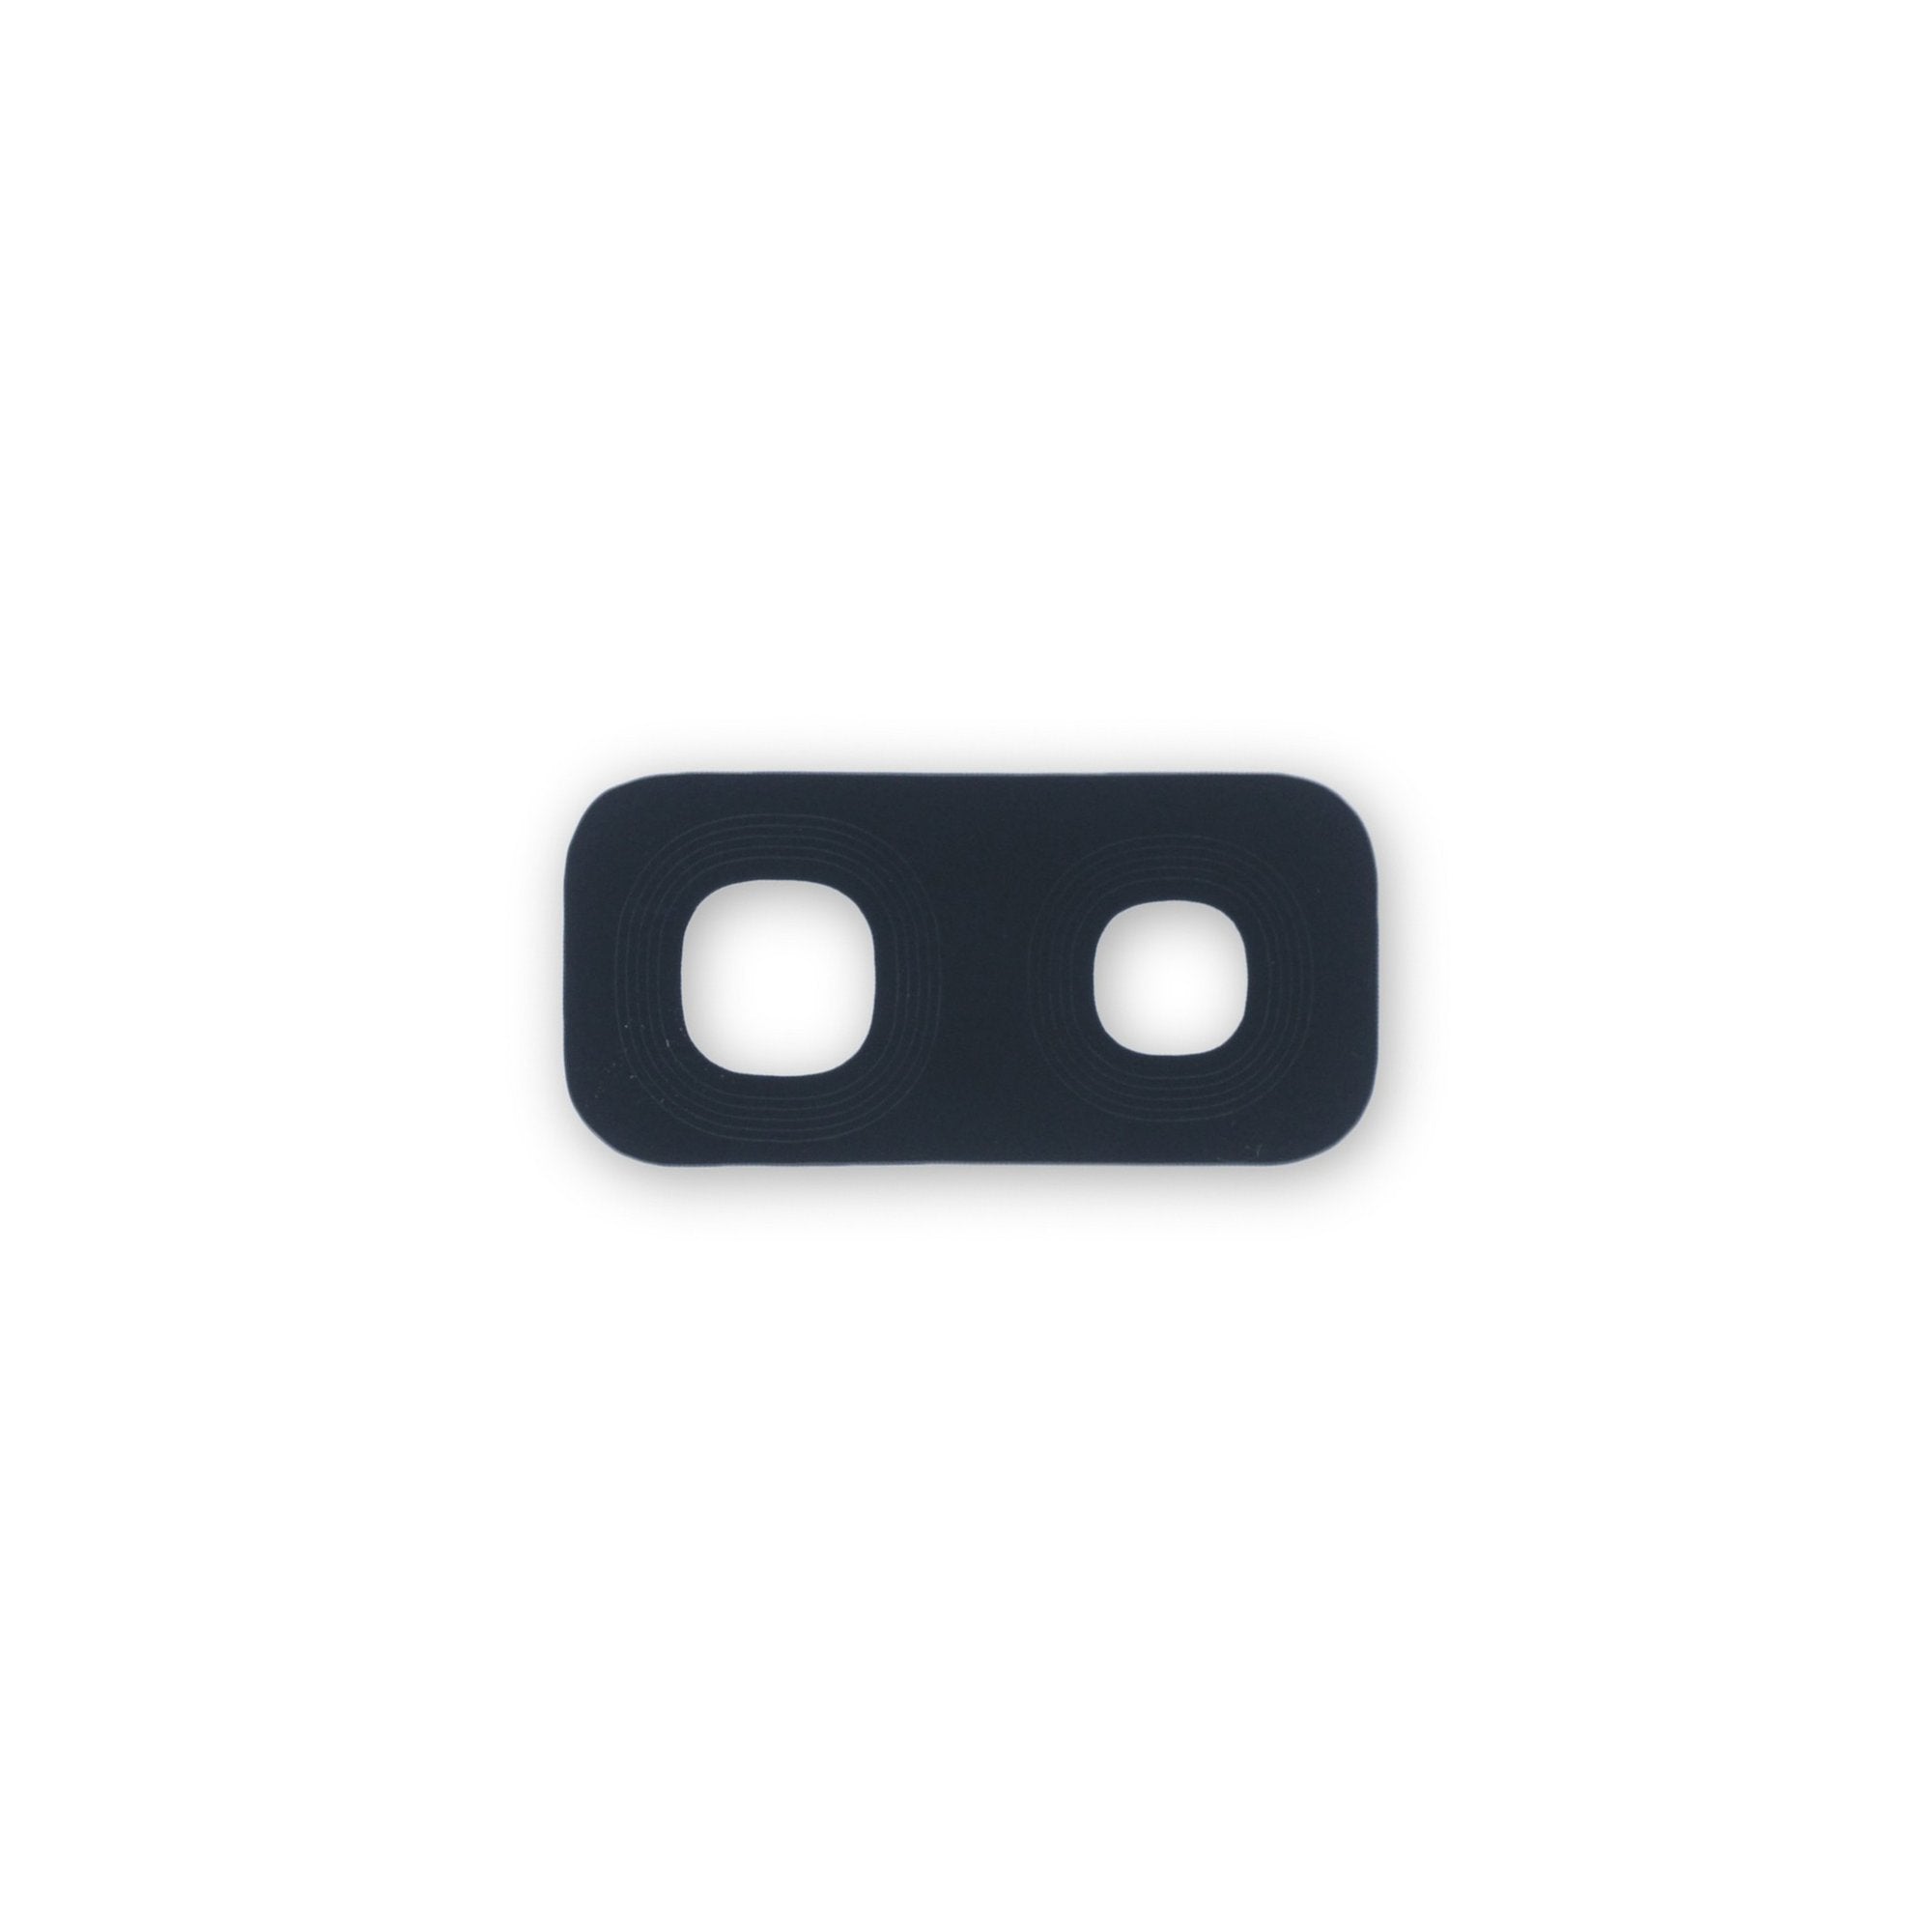 Galaxy S9+ Rear Camera Lens Cover New